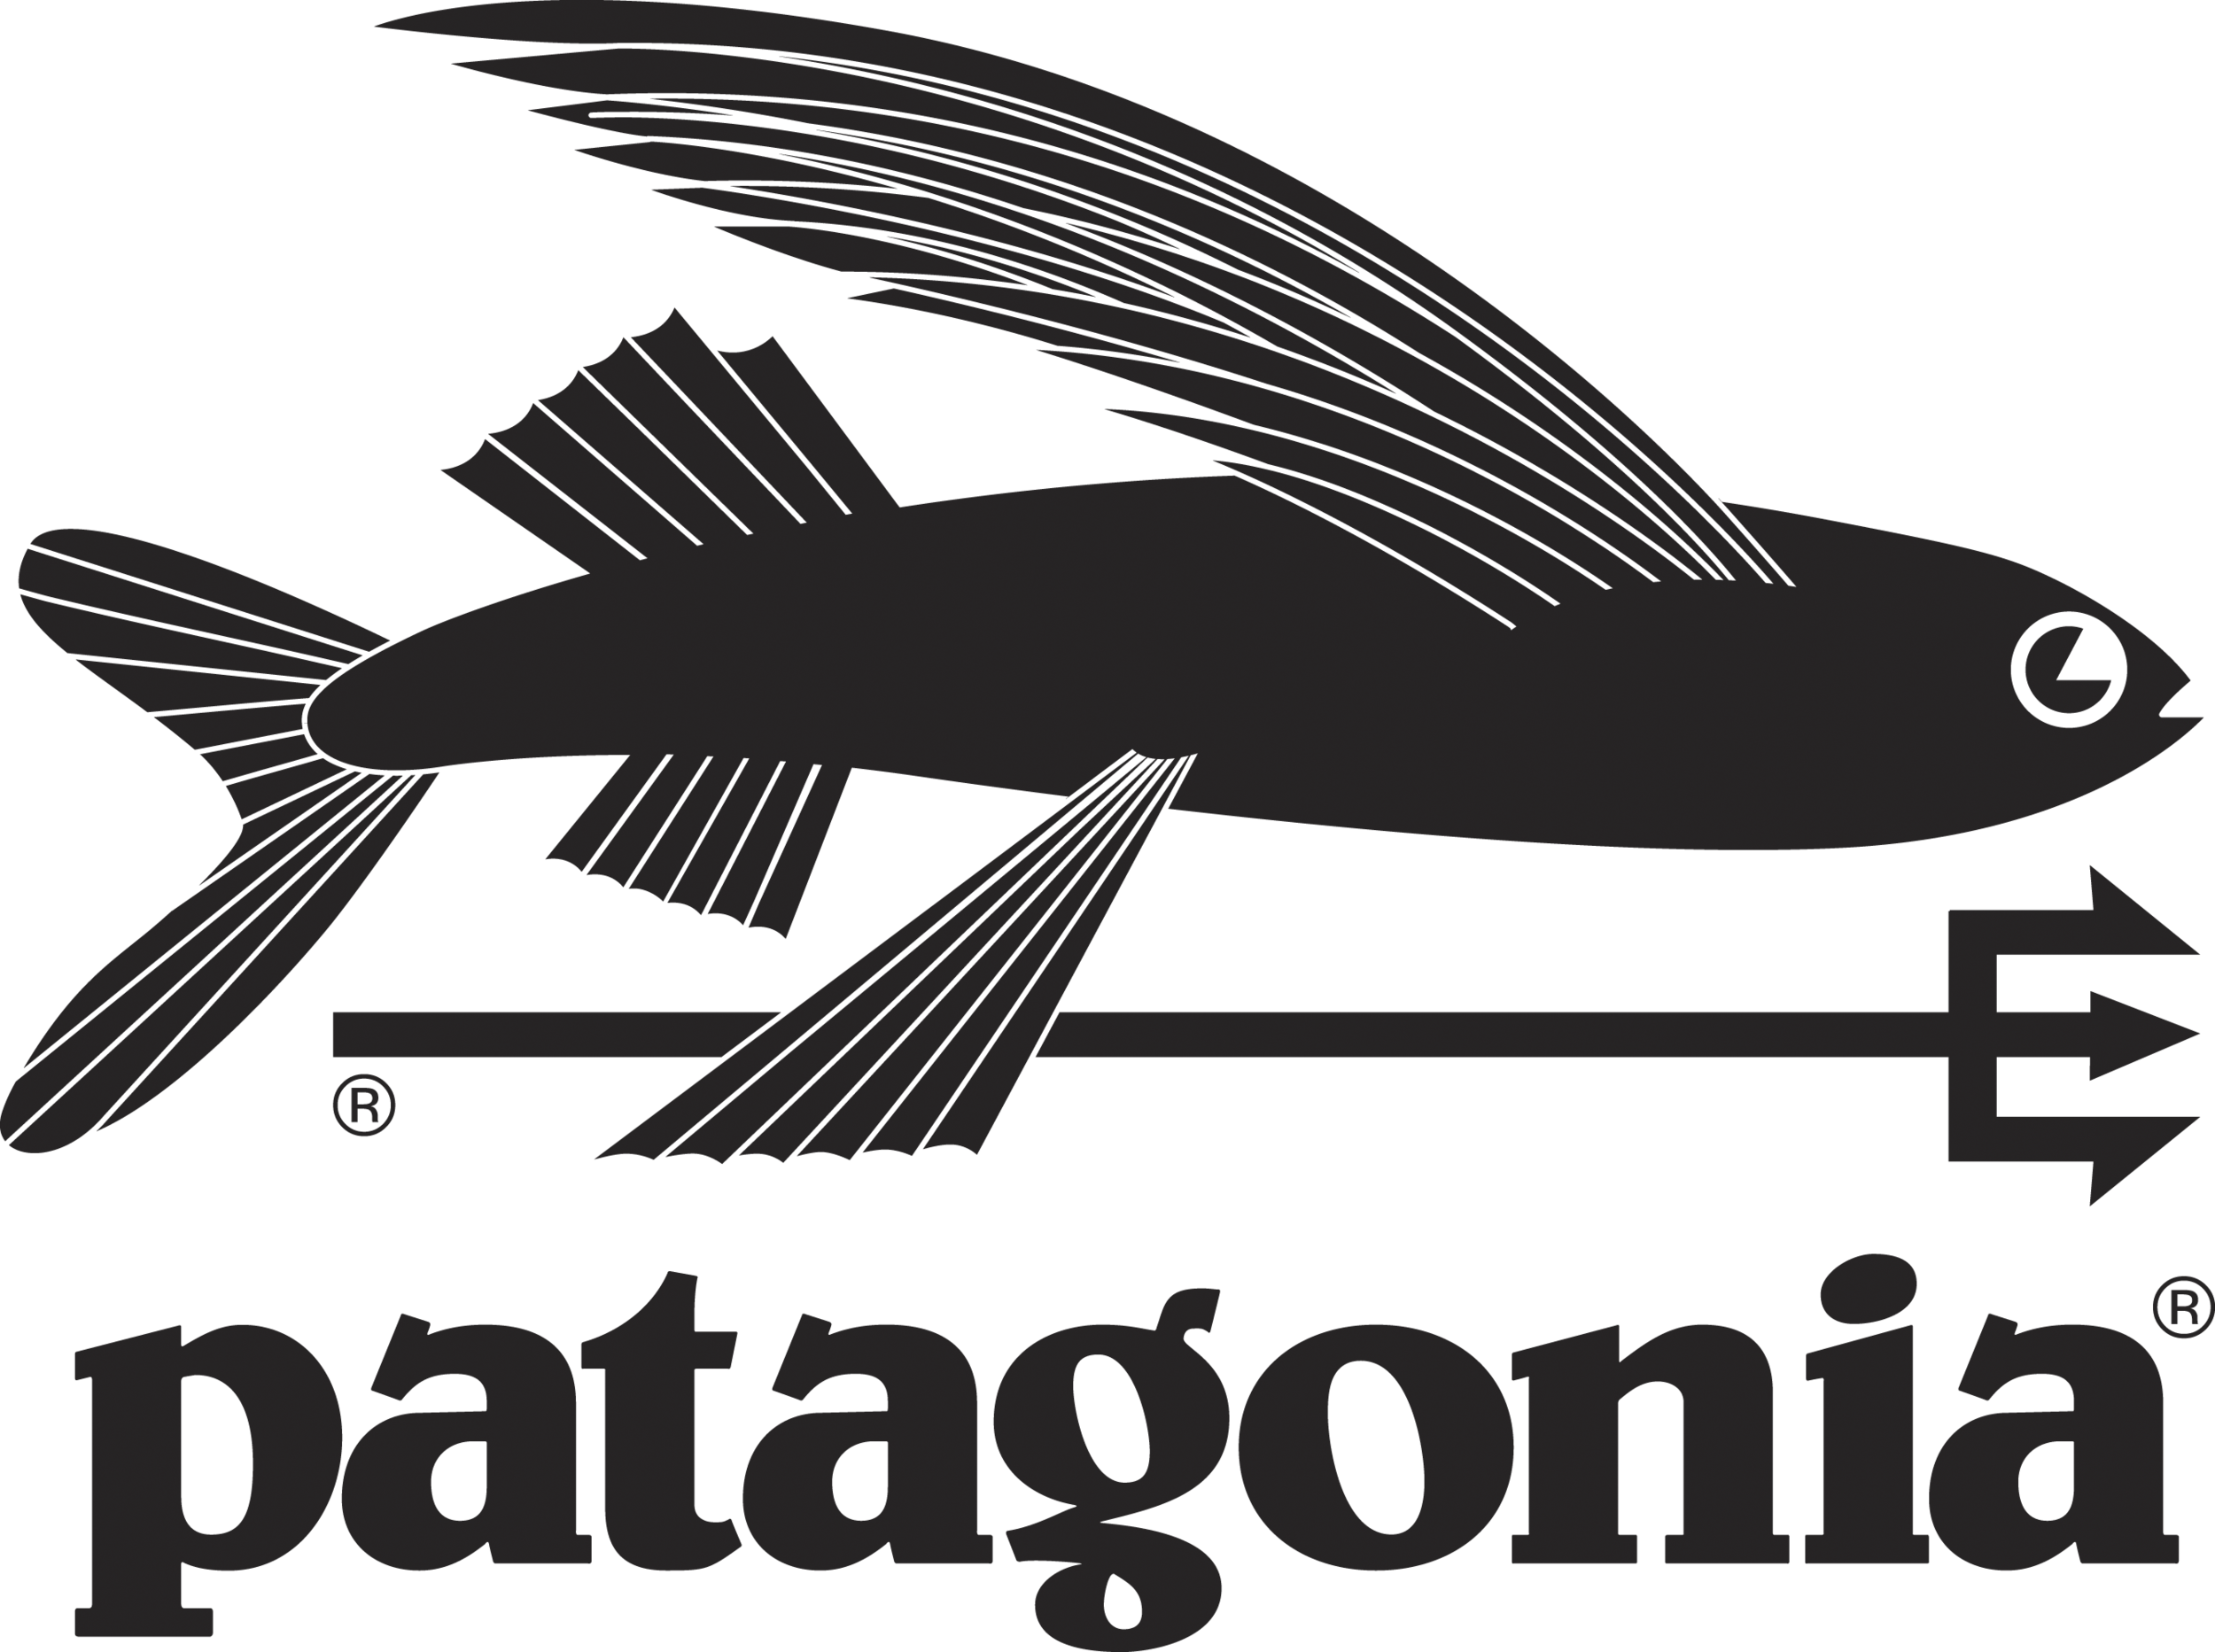 Patagonia Wetsuits